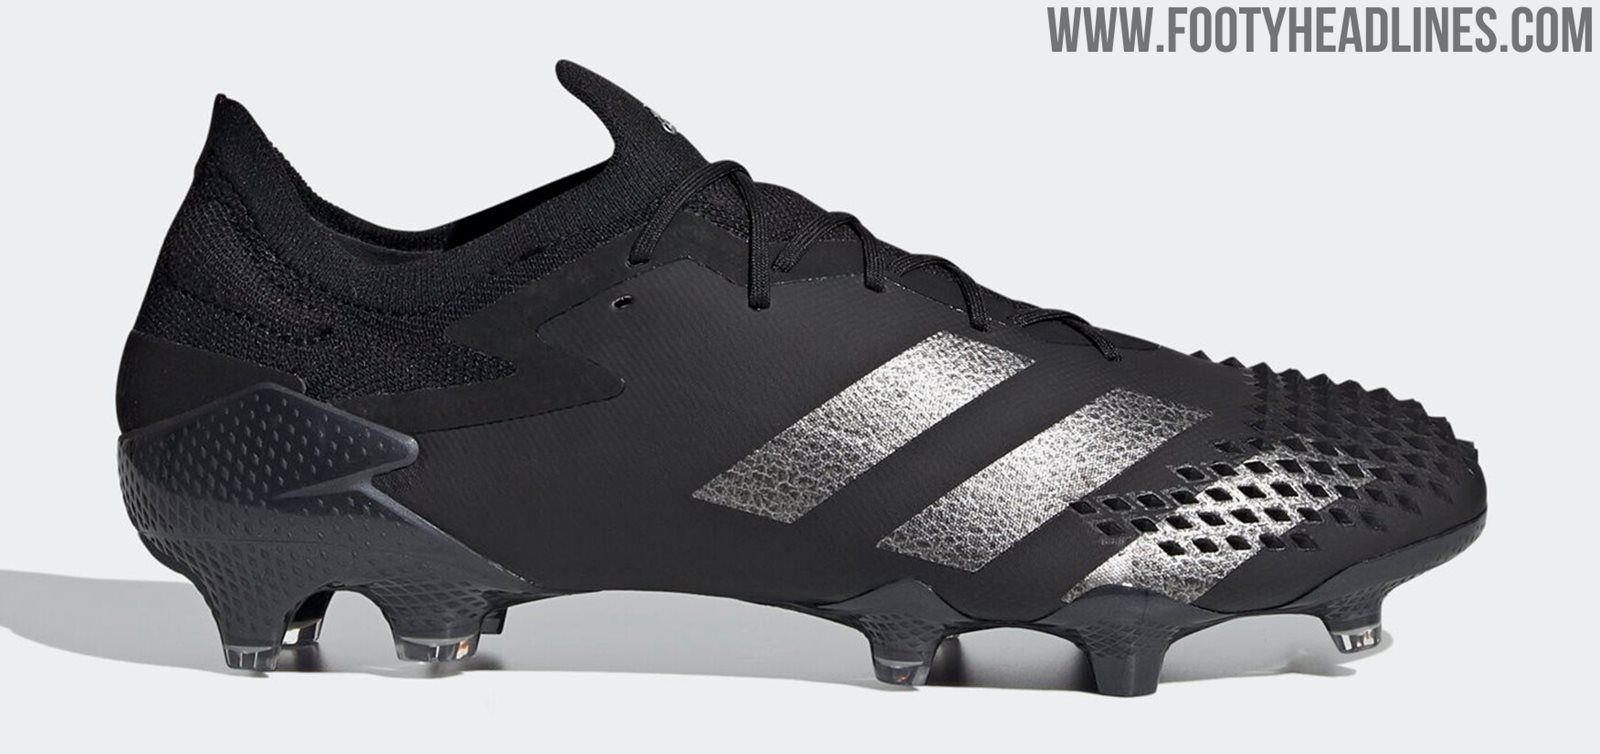 All-New Blackout Adidas Predator 20 Boots - Footy Headlines